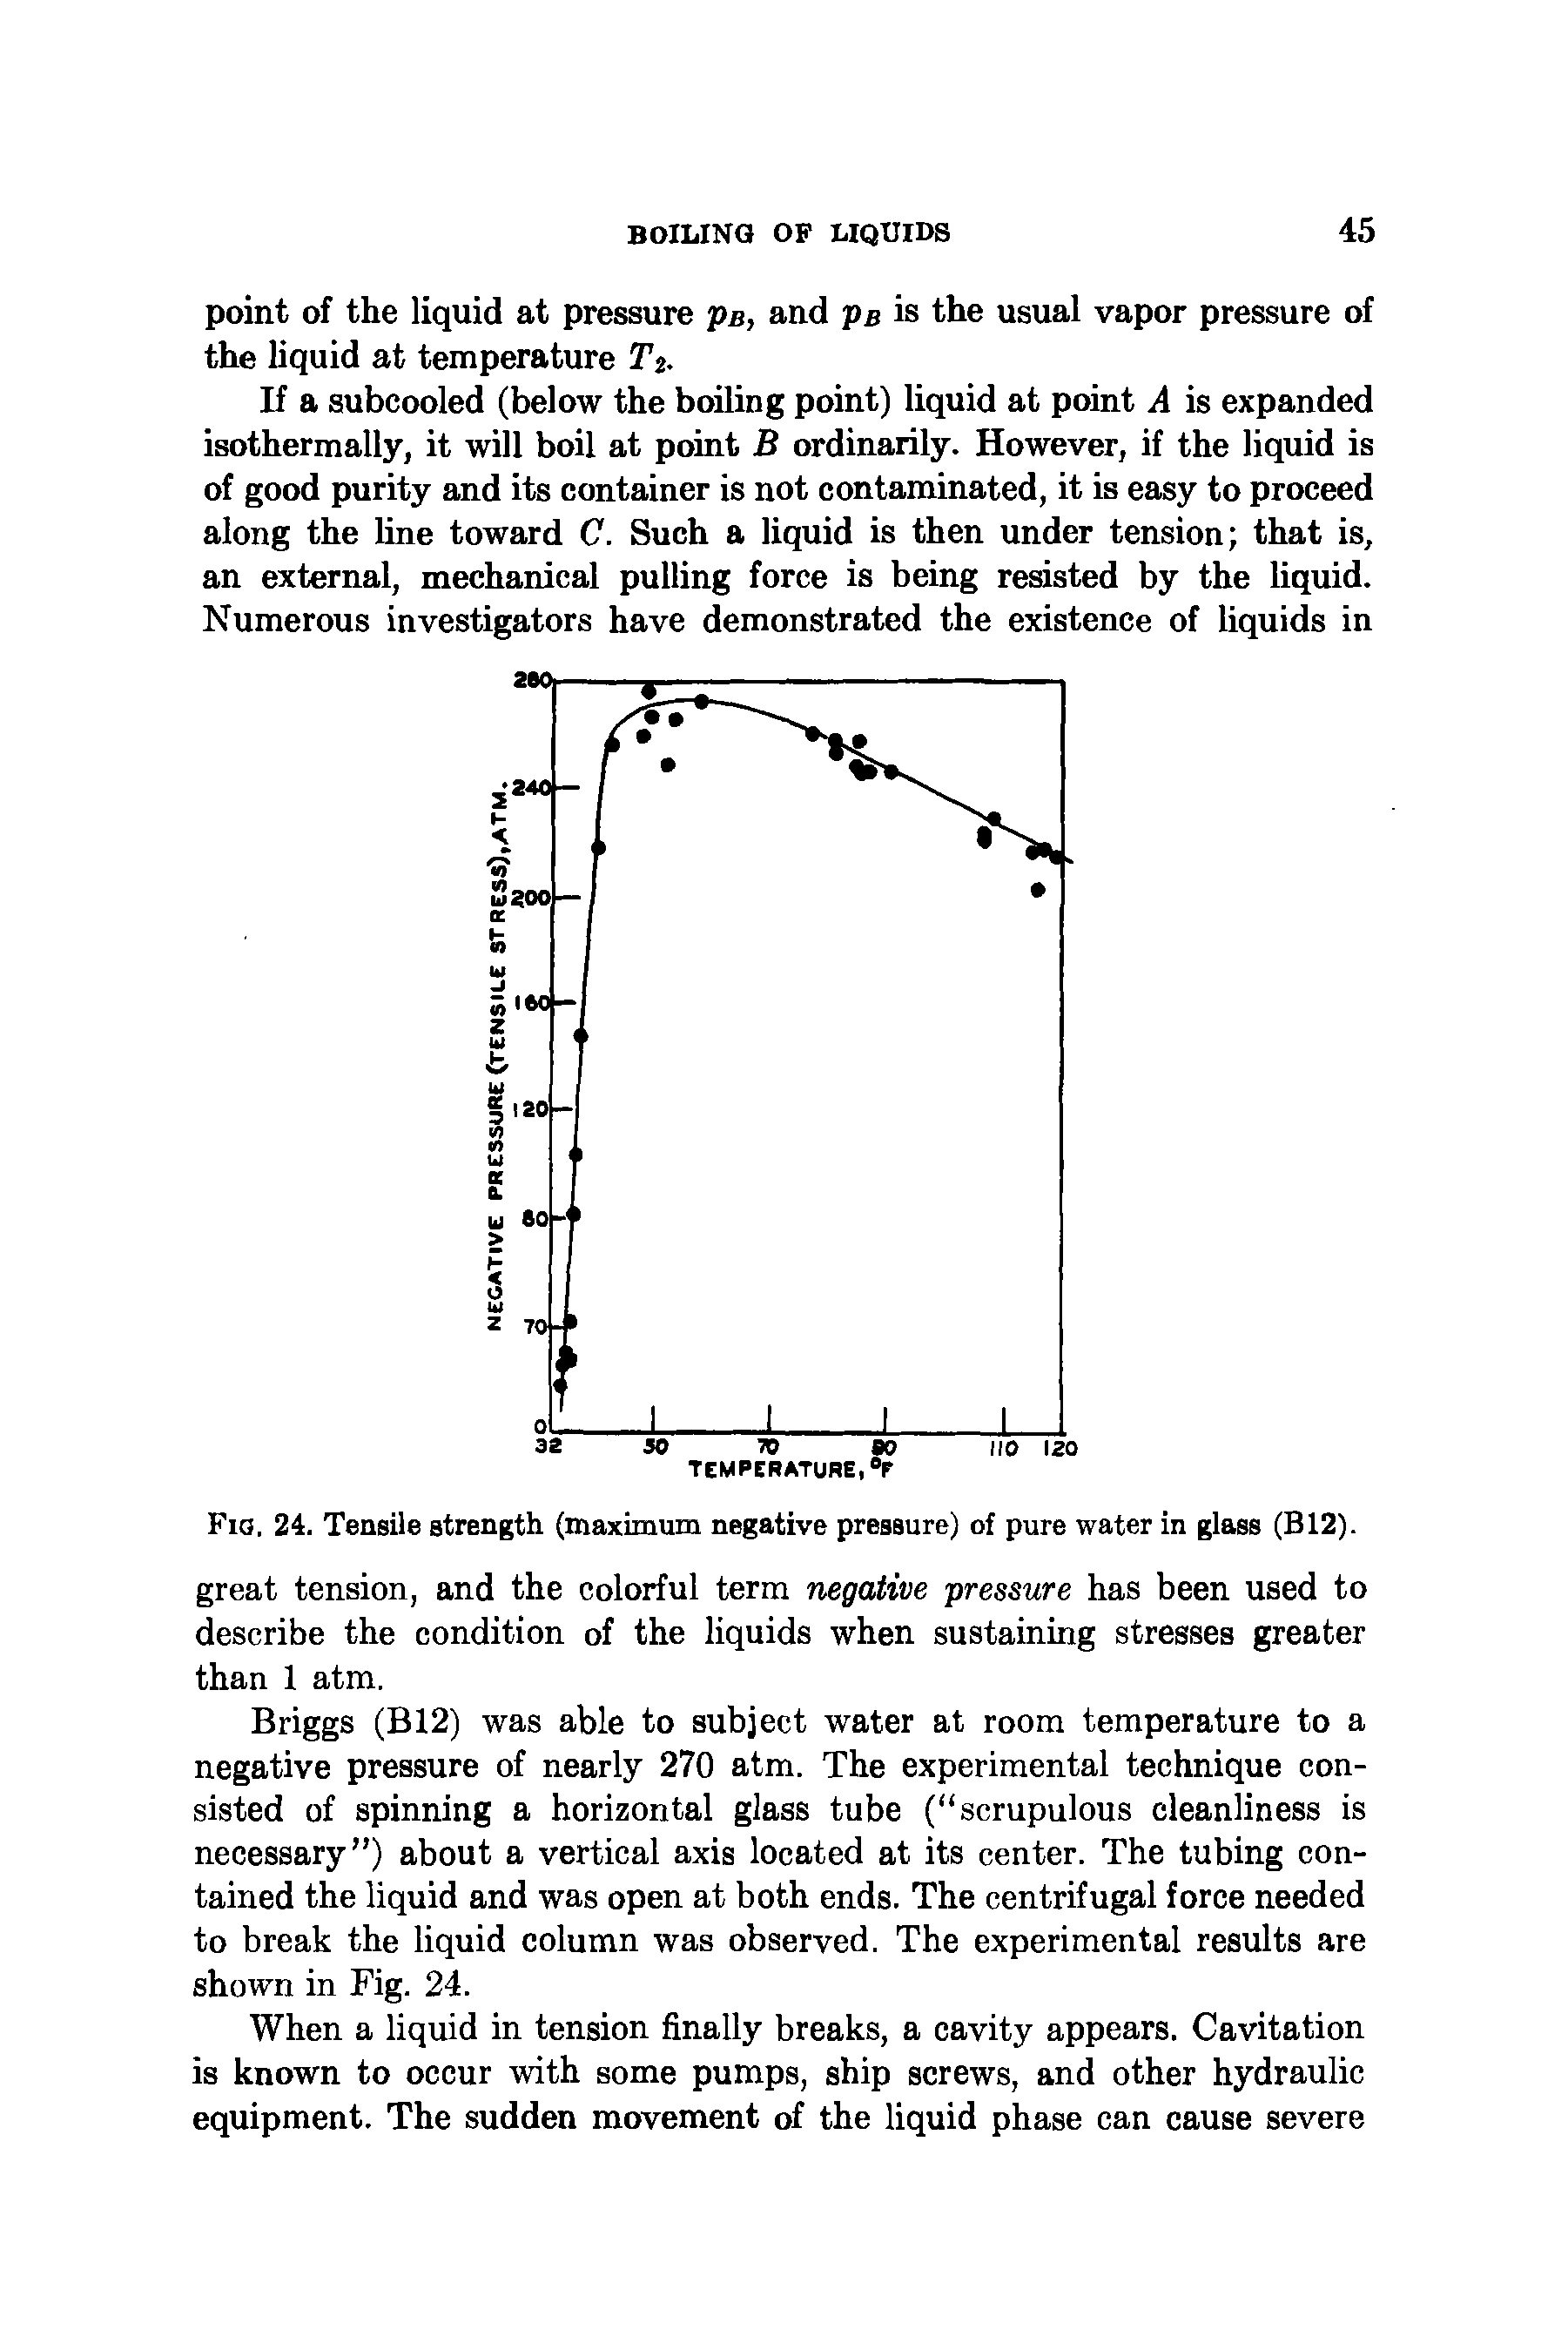 Fig. 24. Tensile strength (maximum negative pressure) of pure water in glass (B12).